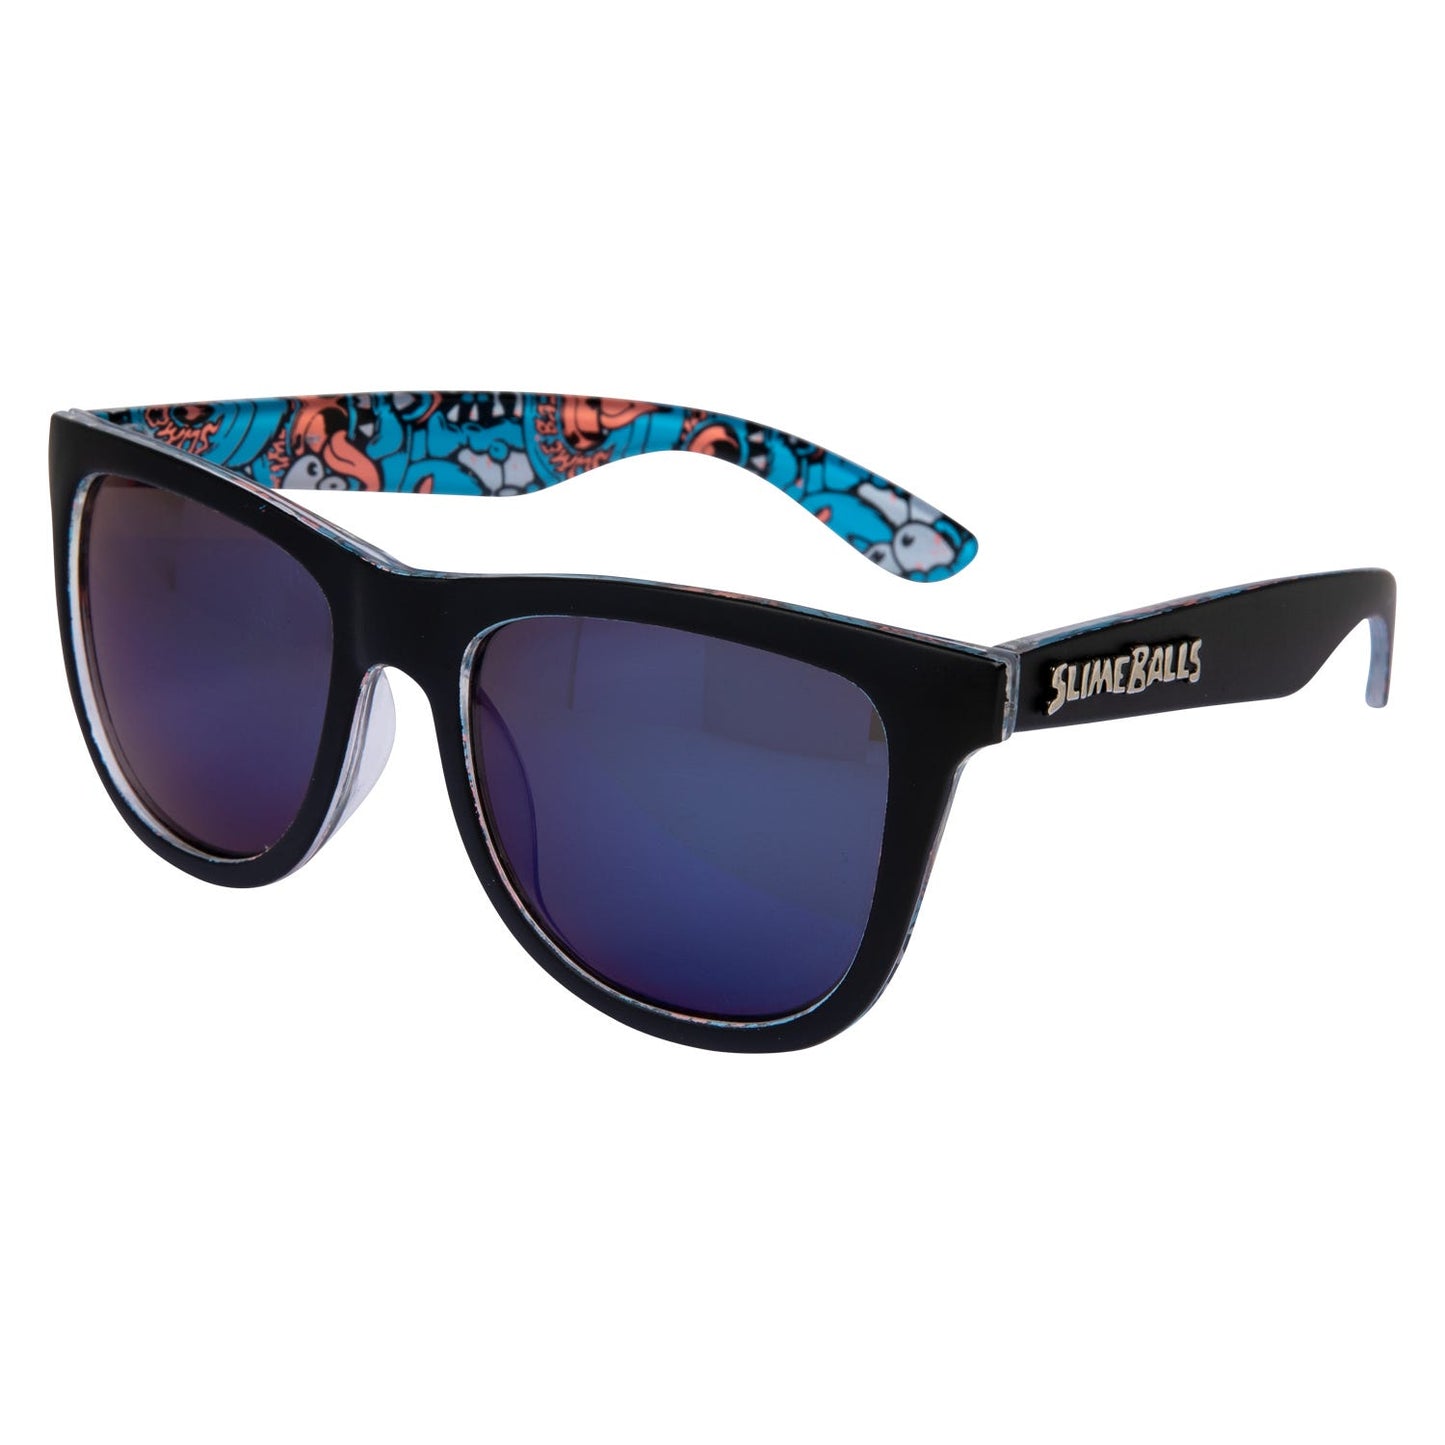 Santa Cruz Slime Ball sunglasses SB Insider black/blue